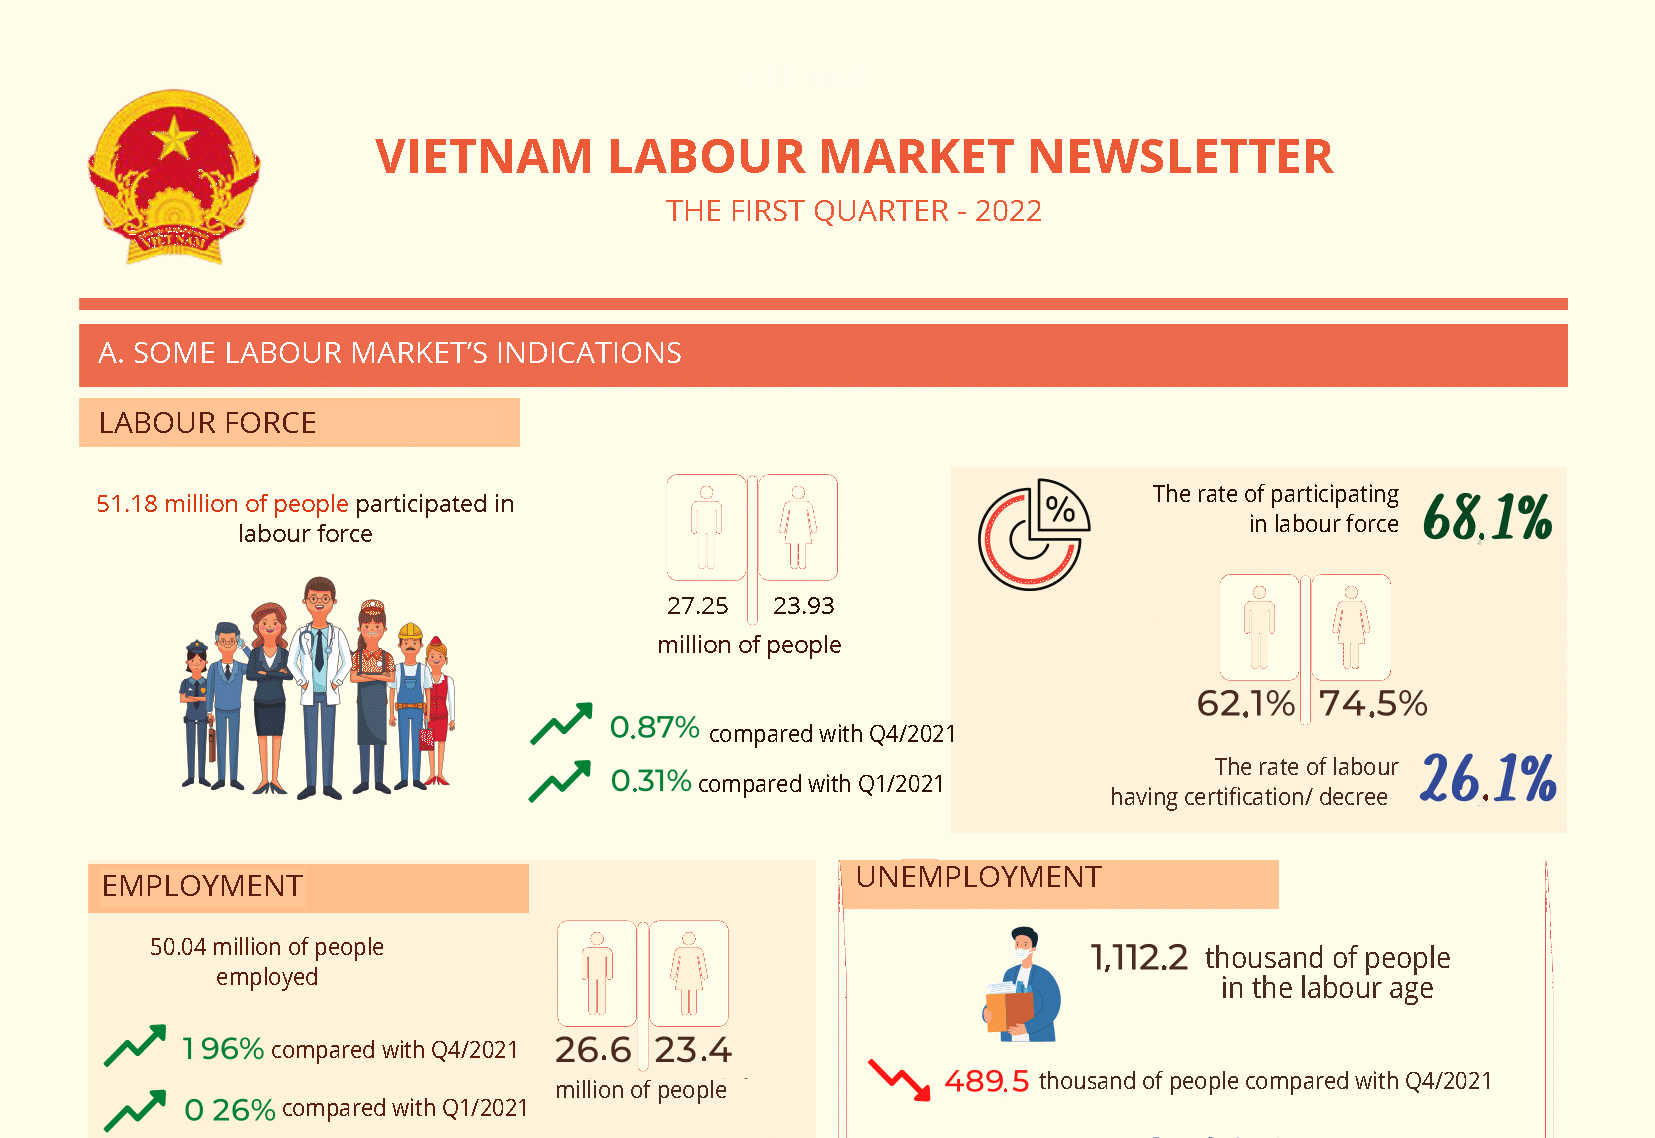 Vietnam labour market newsletter in the first quarter 2022